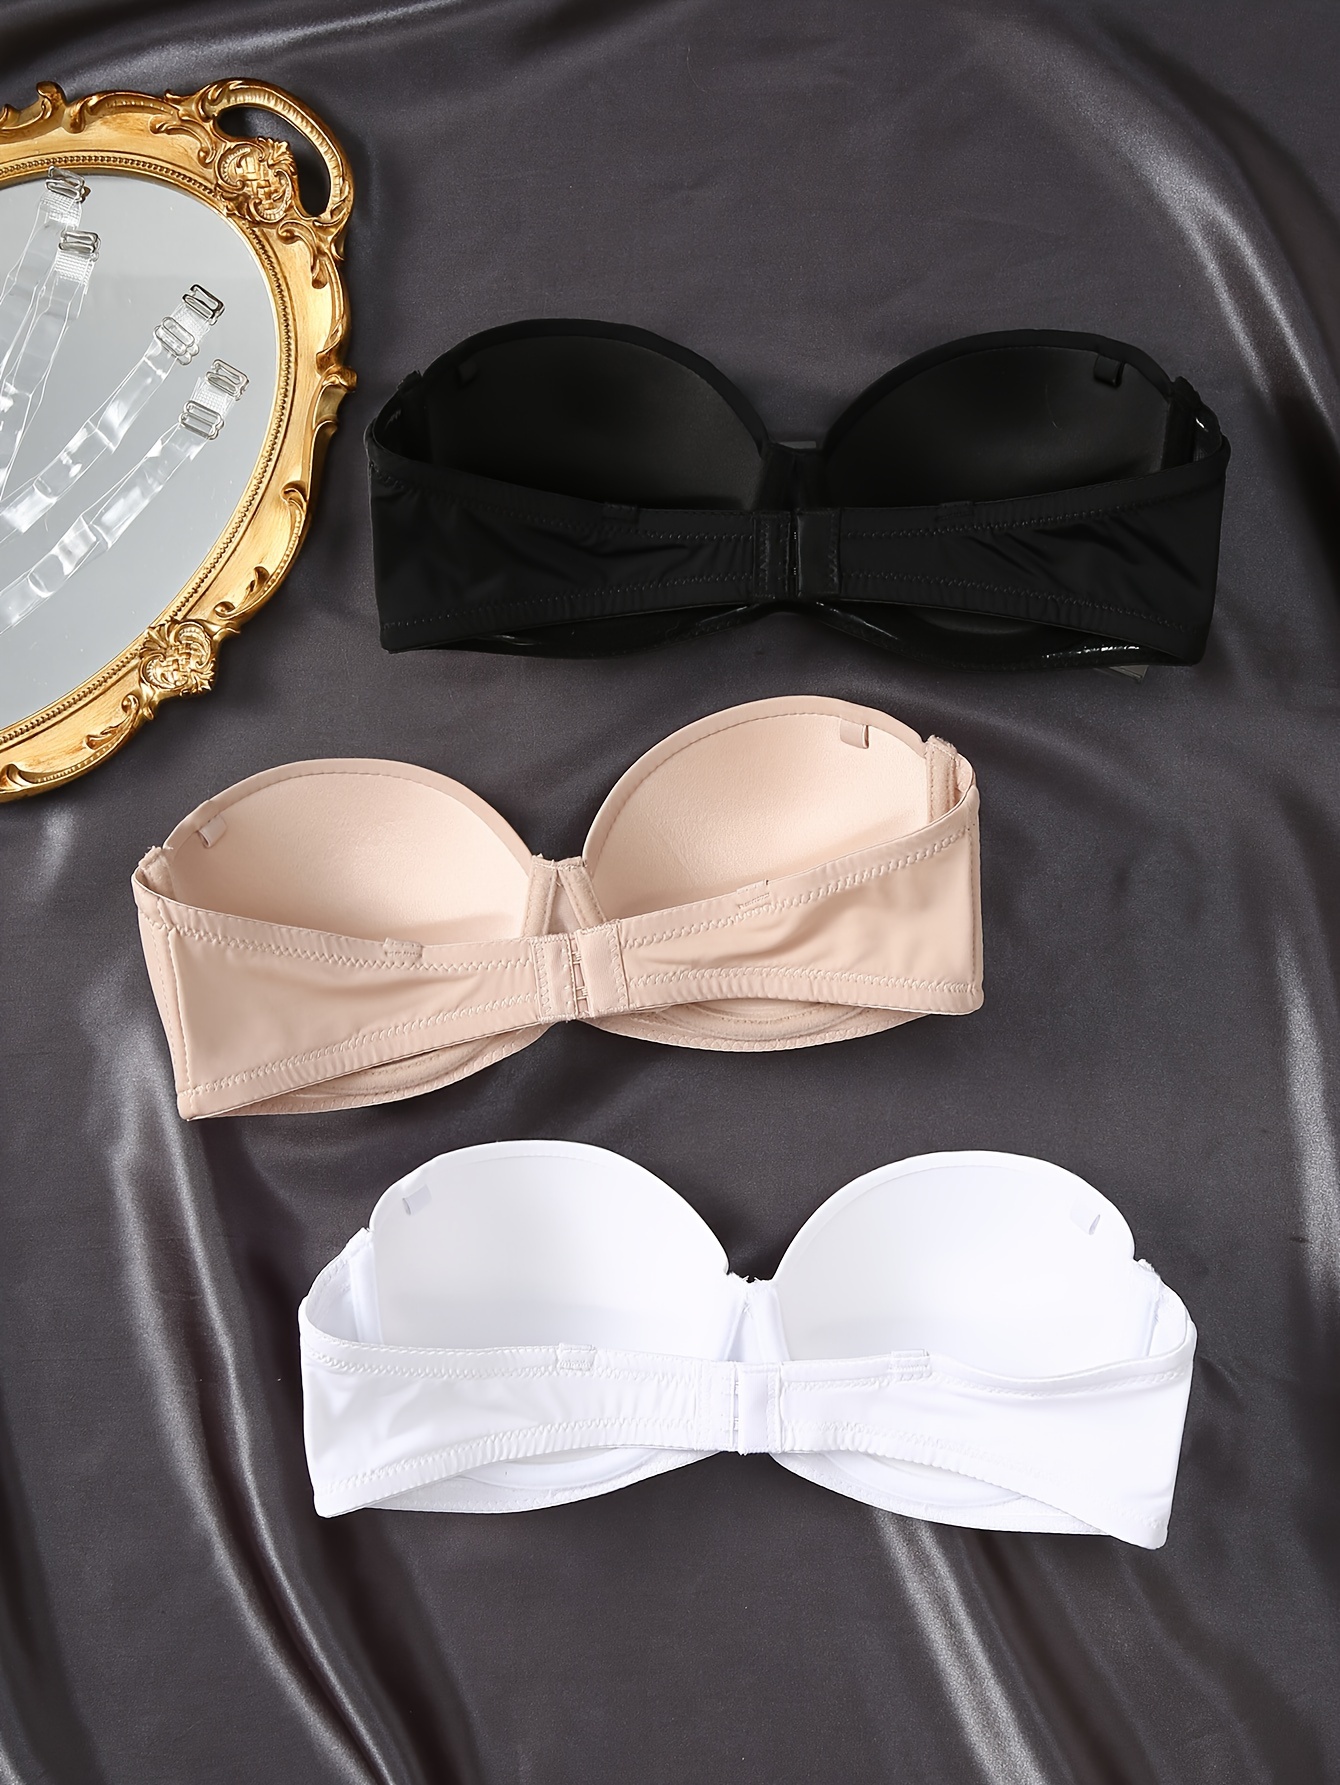 Push-up strapless bra - Push-up - Bras - Underwear - CLOTHING - Woman 